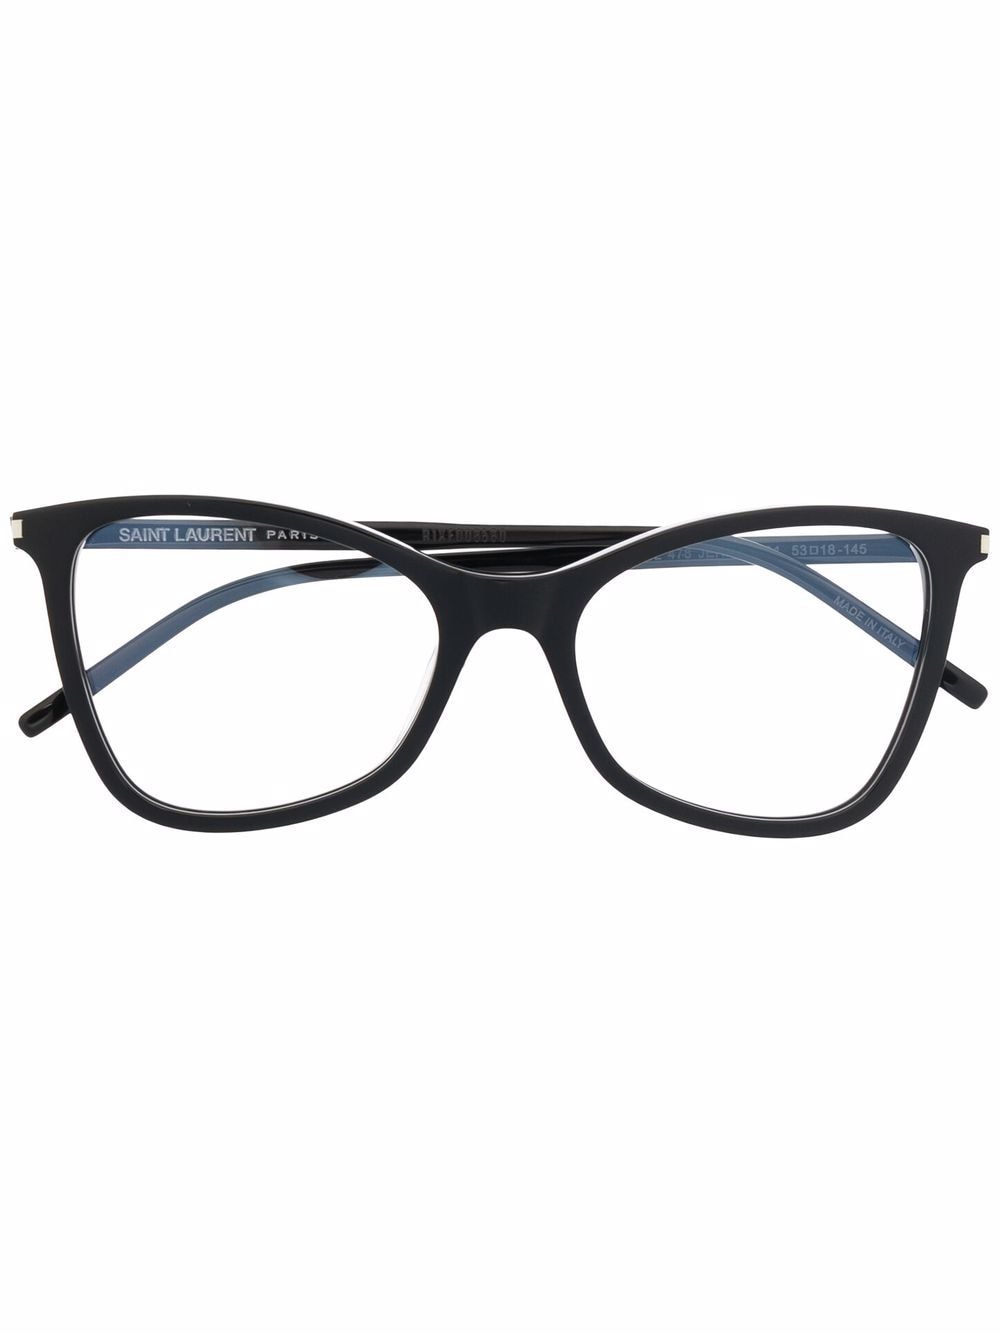 Saint Laurent Eyewear square eyeglass frames - Black von Saint Laurent Eyewear